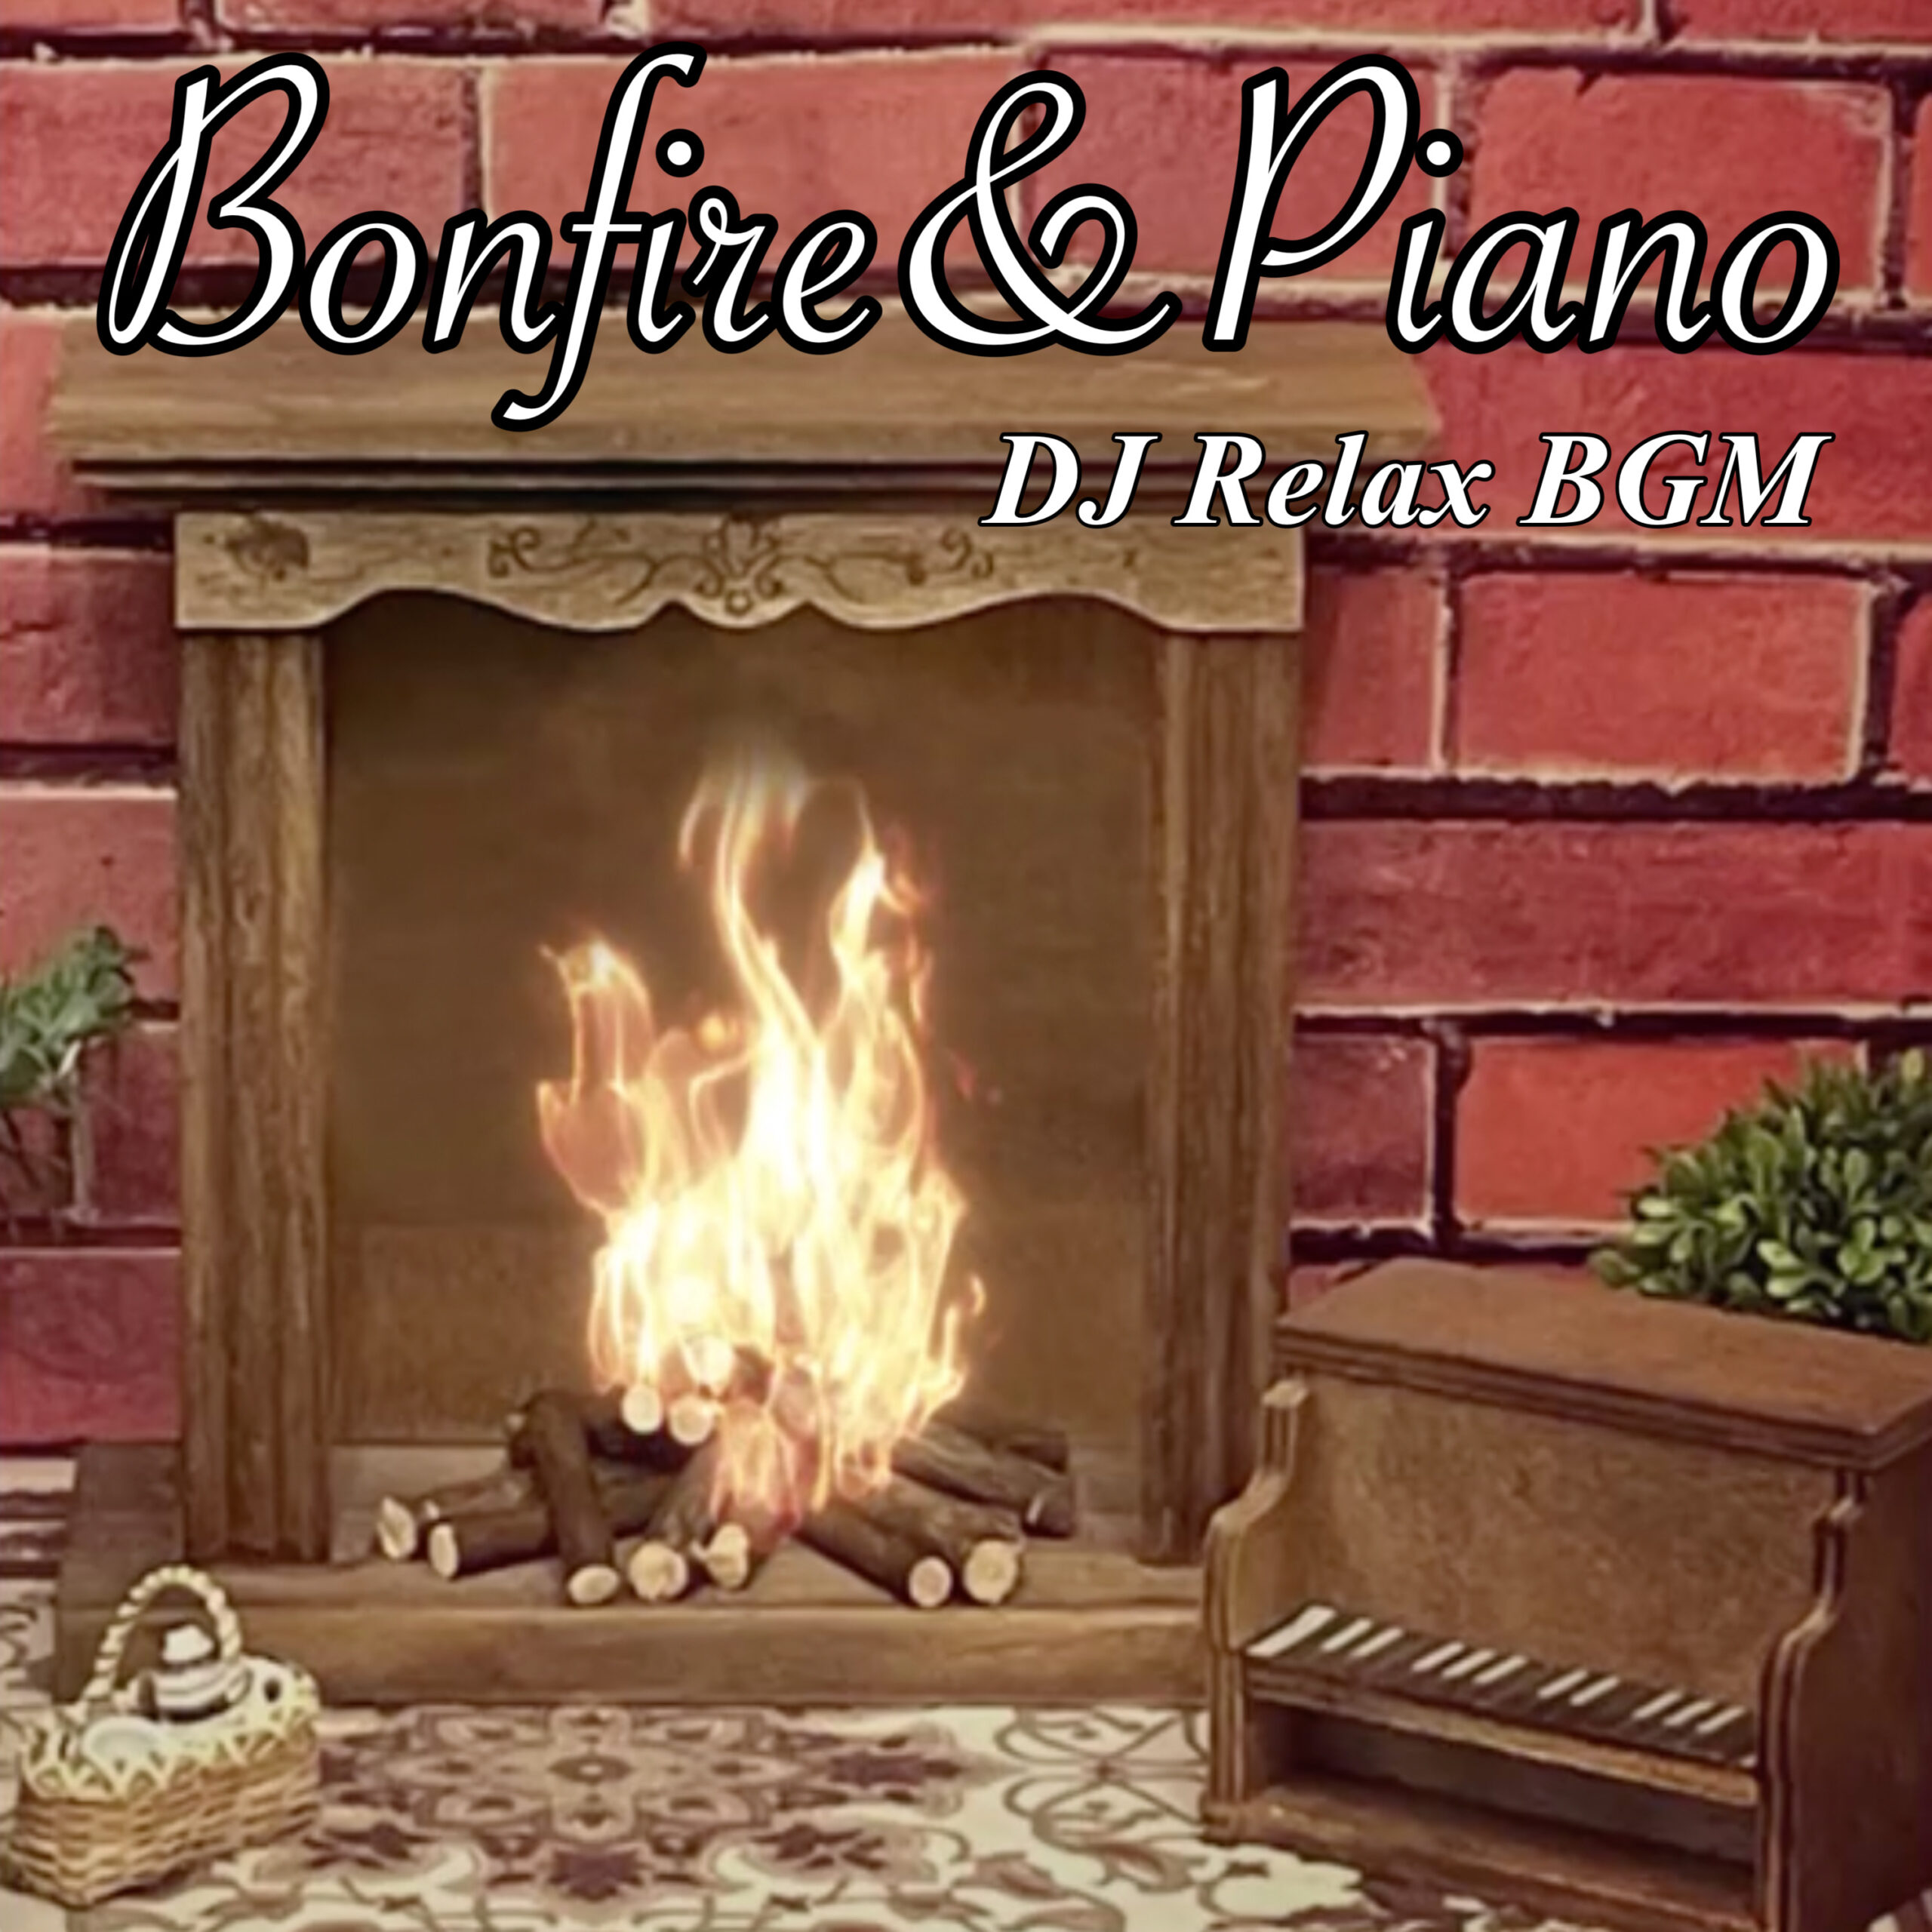 Bonfire&piano 